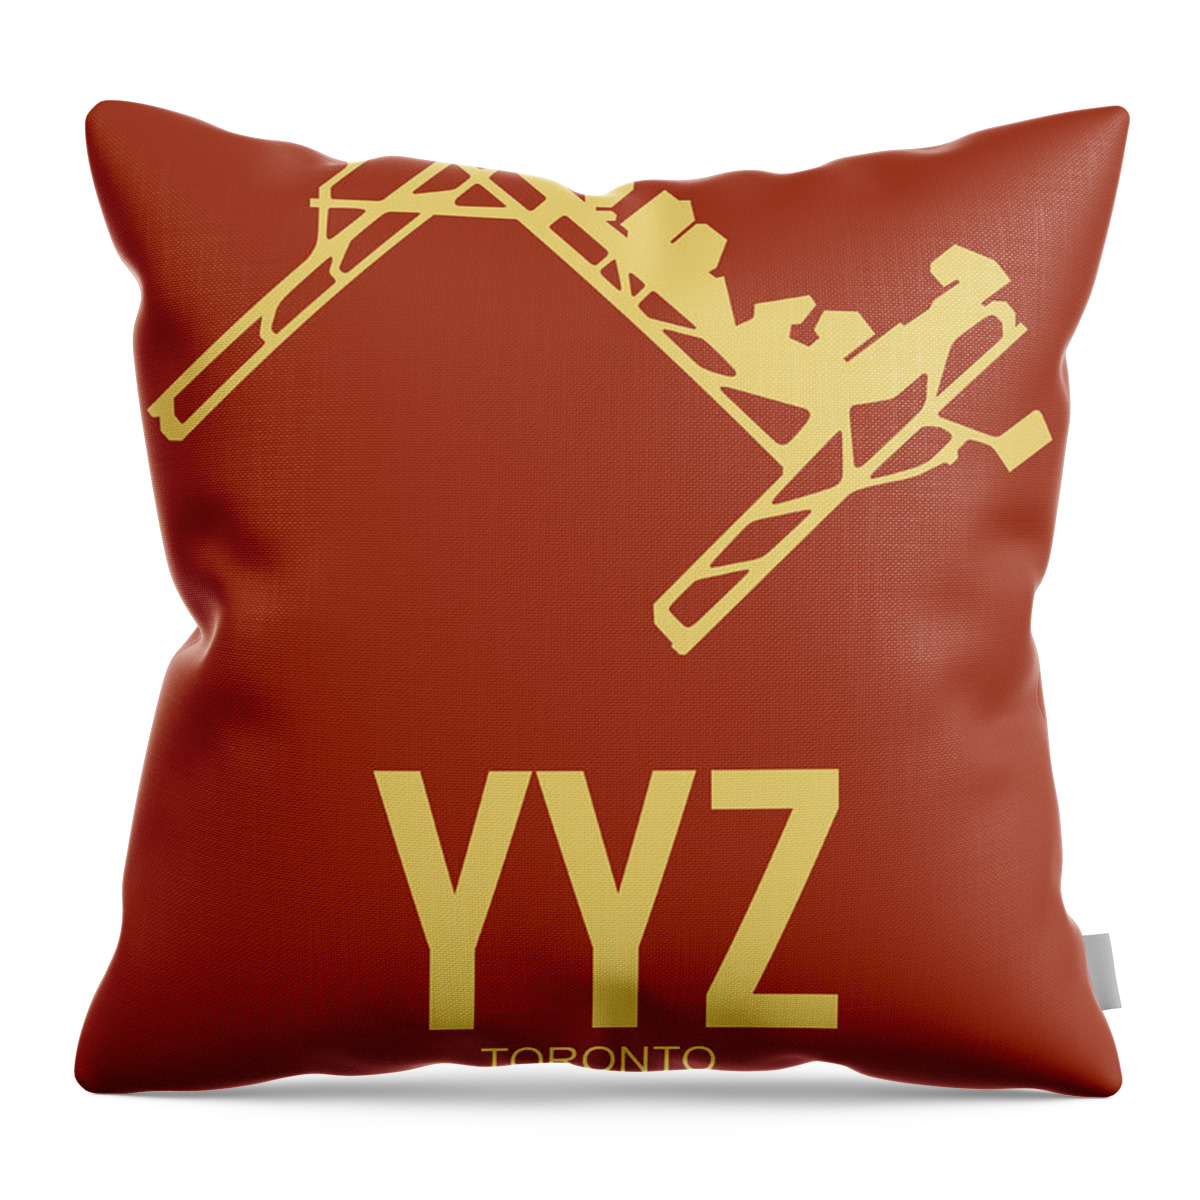 Toronto Throw Pillow featuring the digital art YYZ Toronto Airport Poster 3 by Naxart Studio